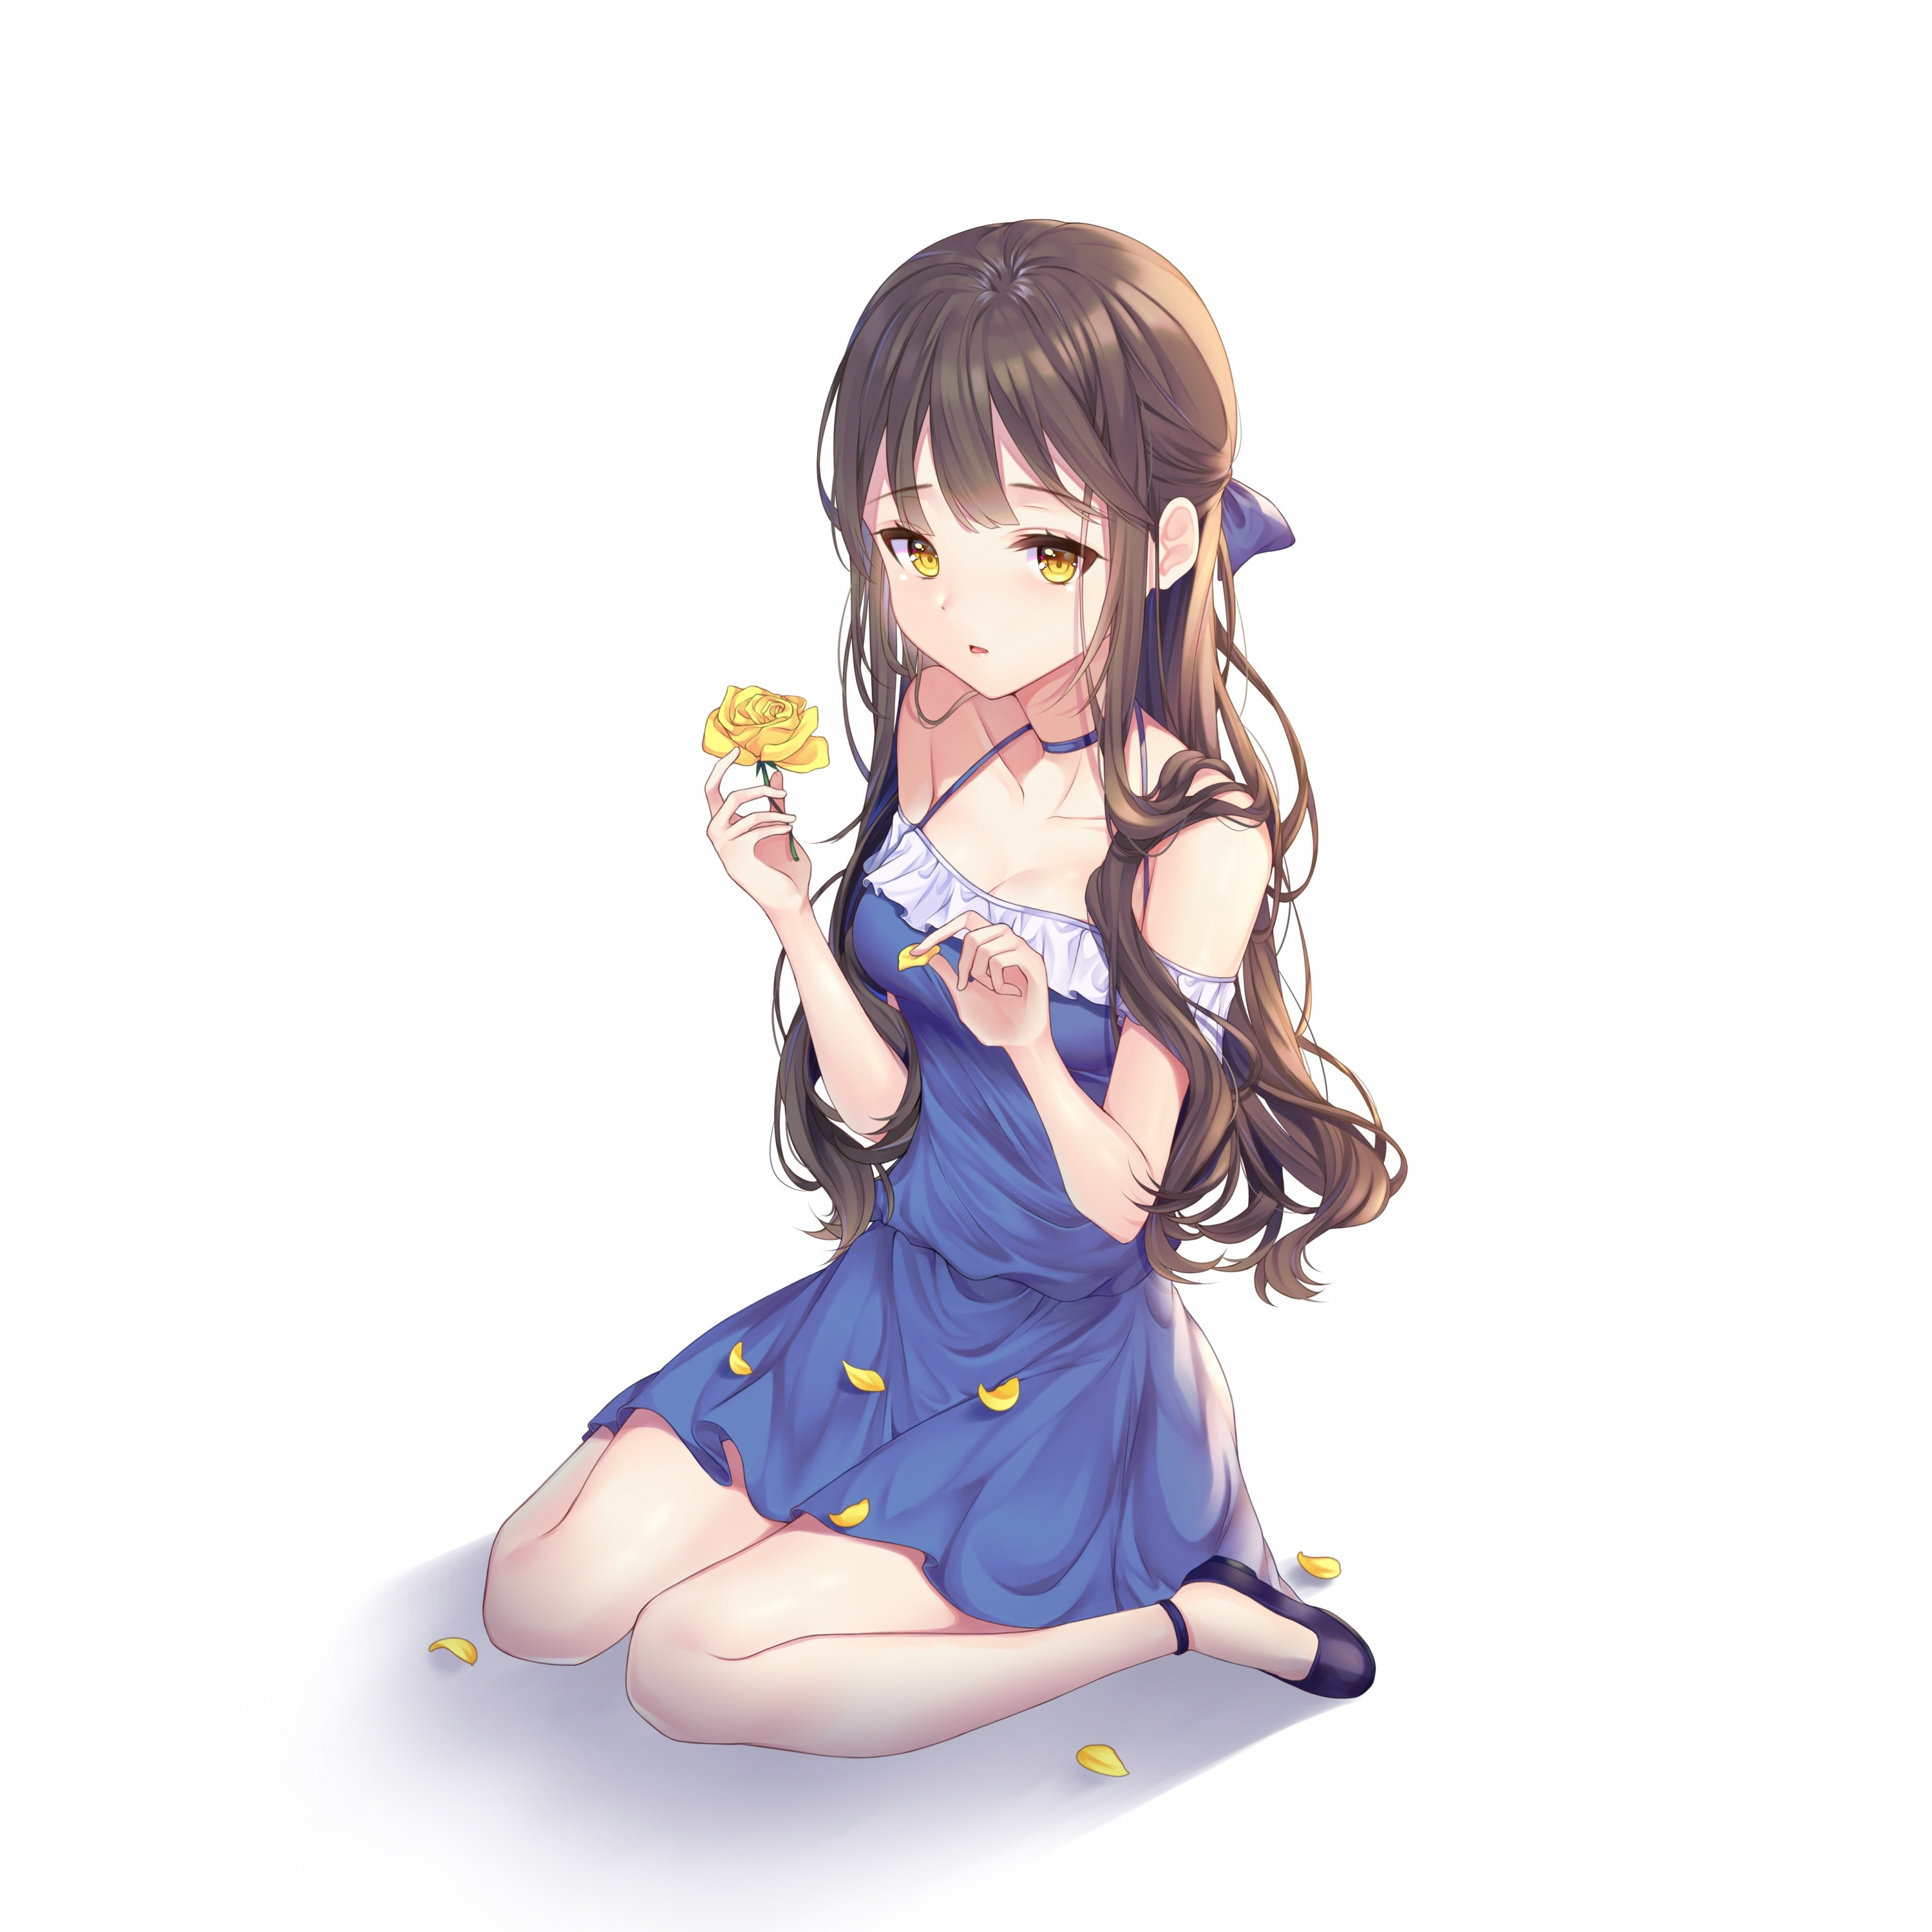 Download wallpaper 2932x2932 yellow flower, cute, original, anime girl,  ipad pro retina, 2932x2932 hd background, 7854